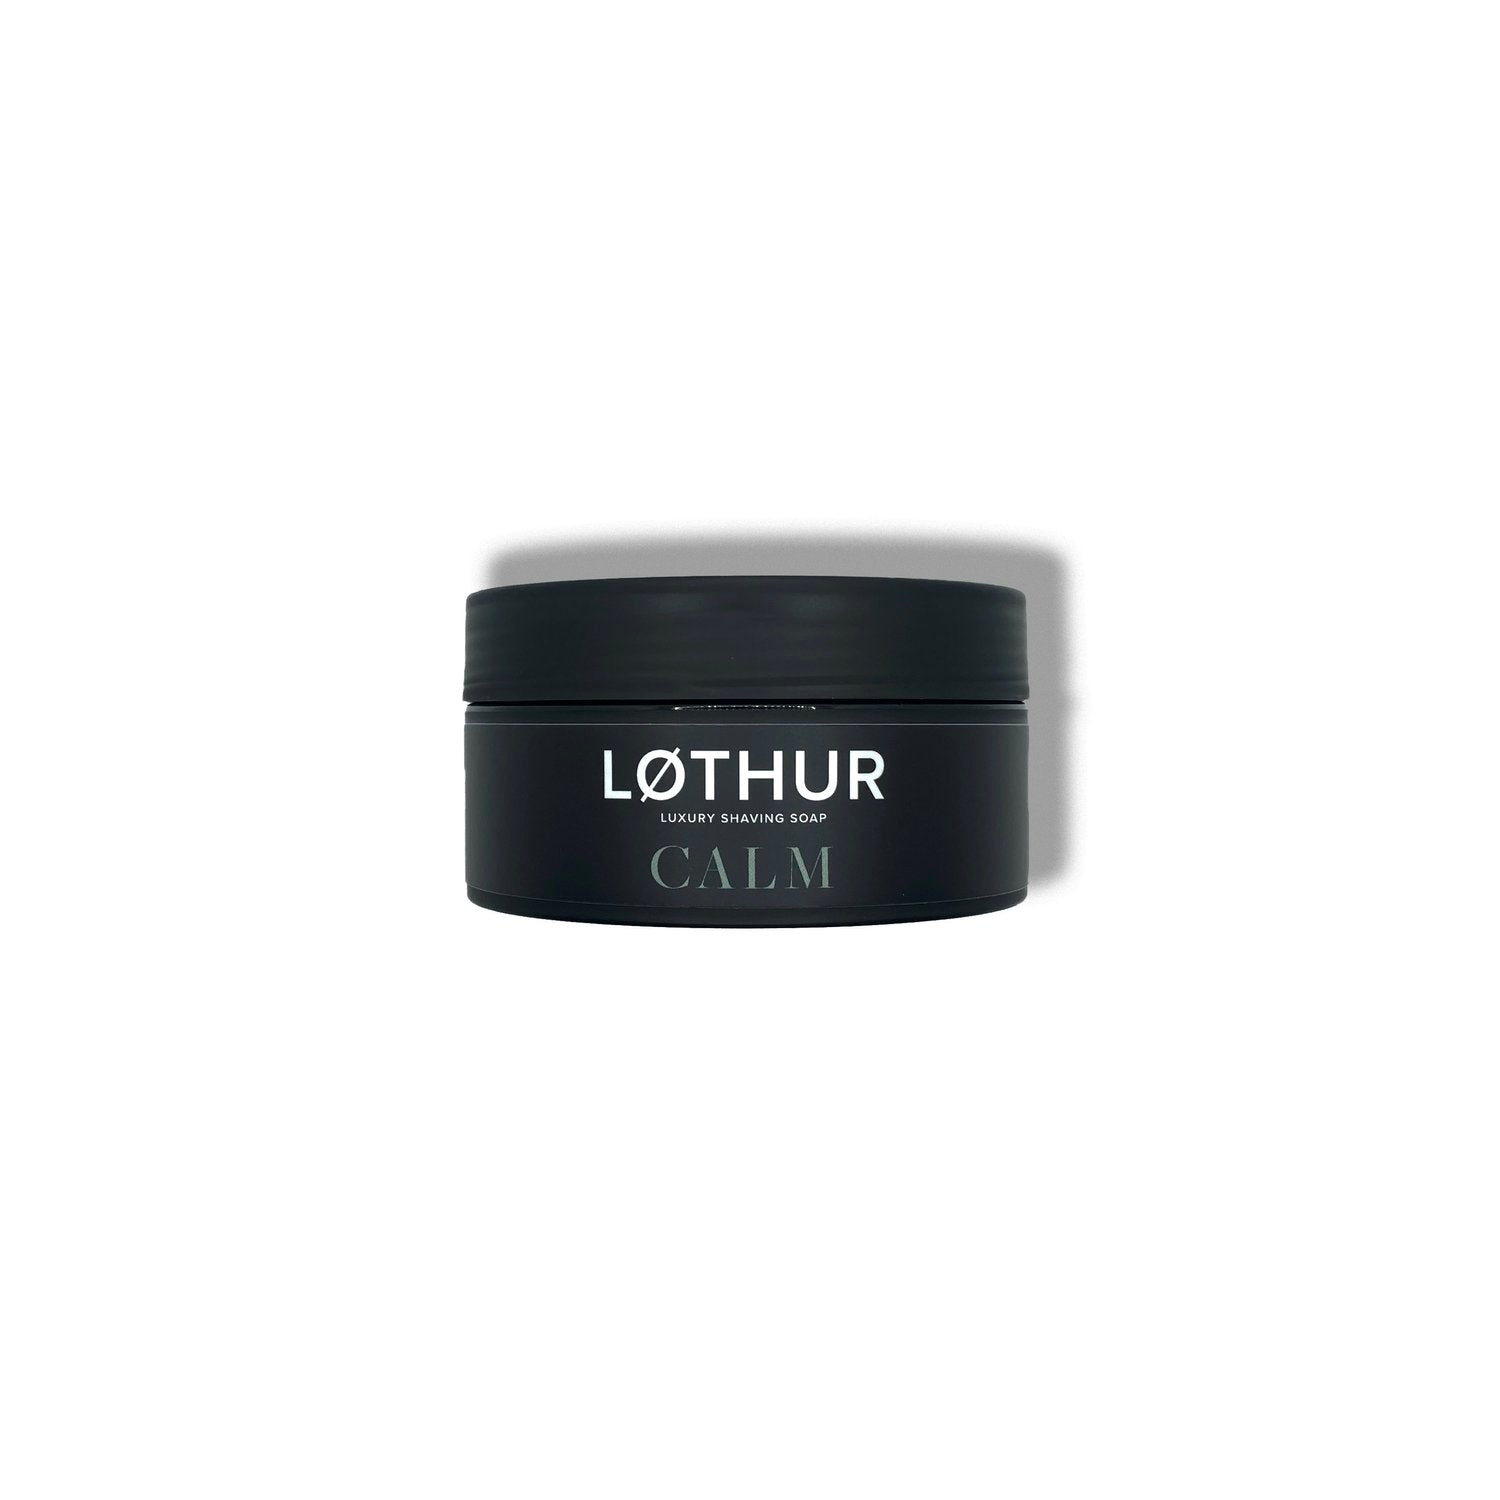 Lothur Calm Shaving Soap 115g